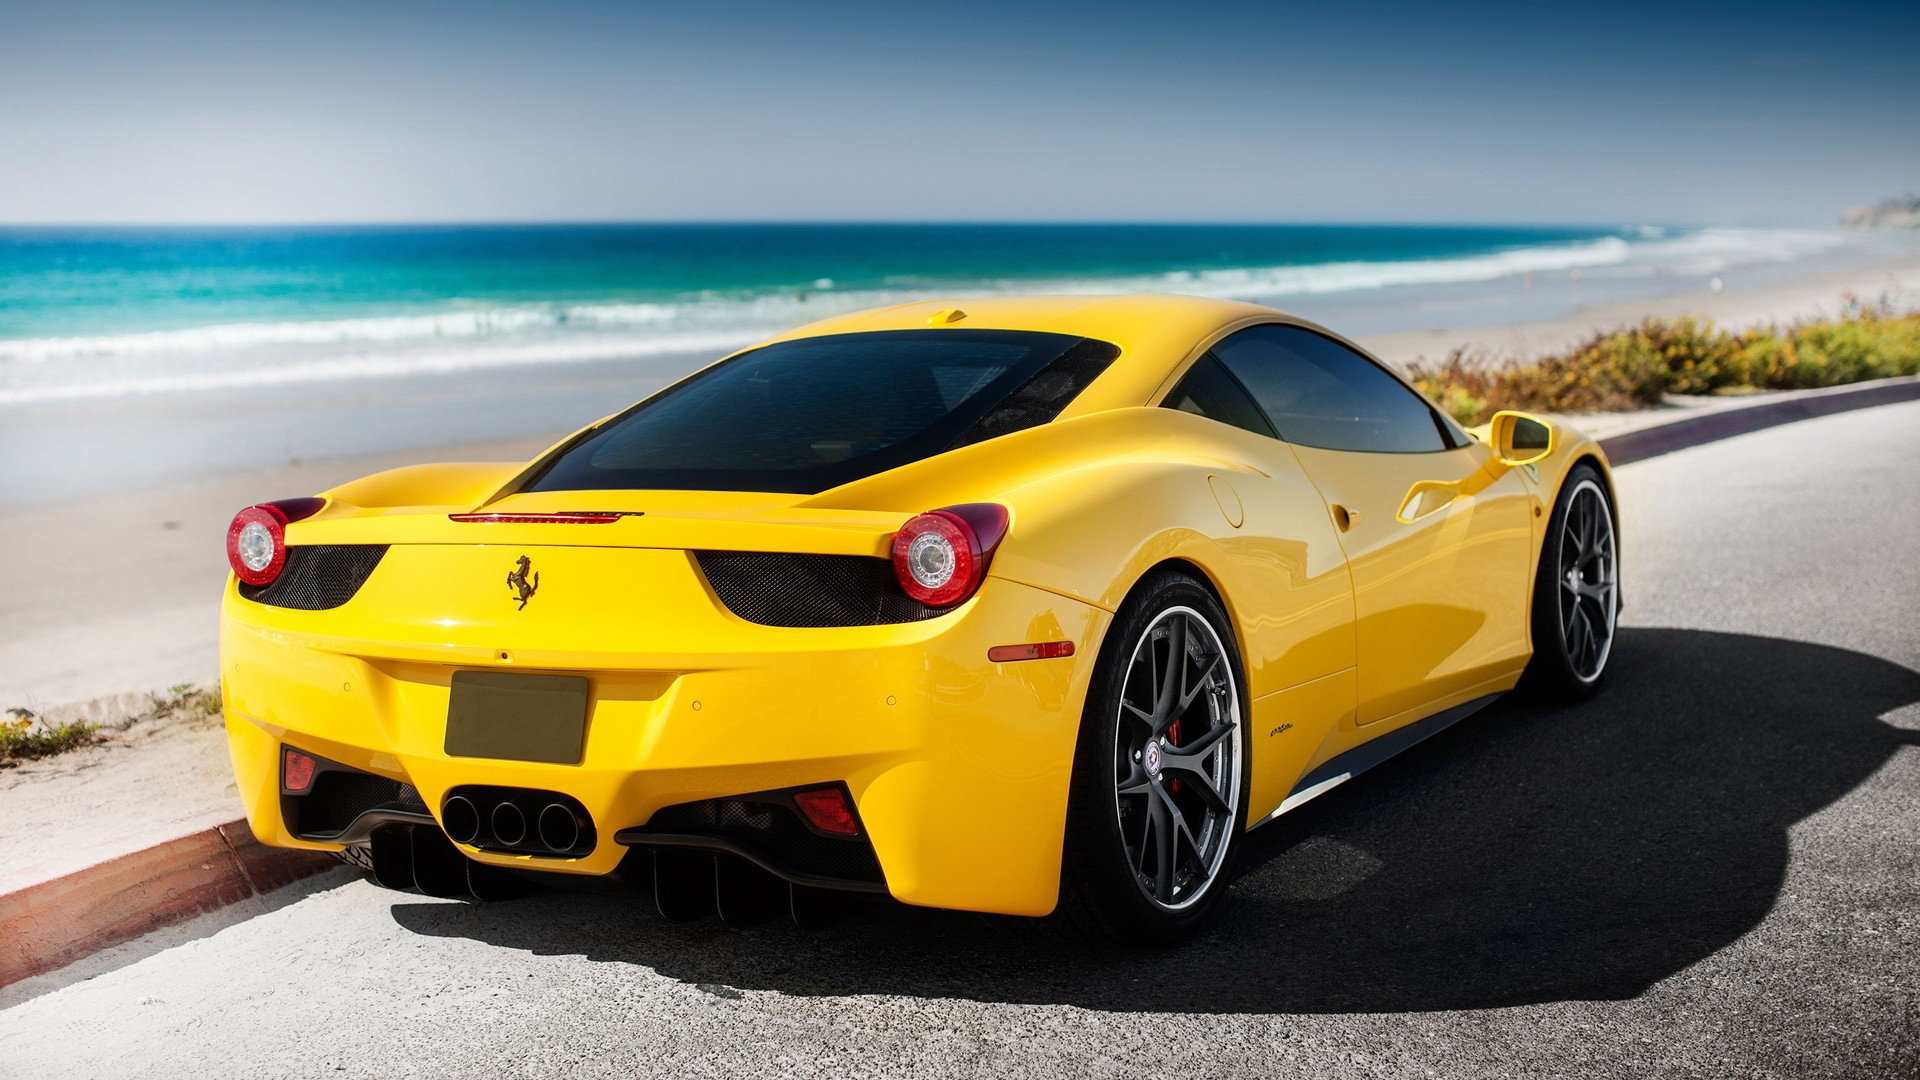 Download hd 1920x1080 Ferrari 458 Italia desktop background ID:92474 for free